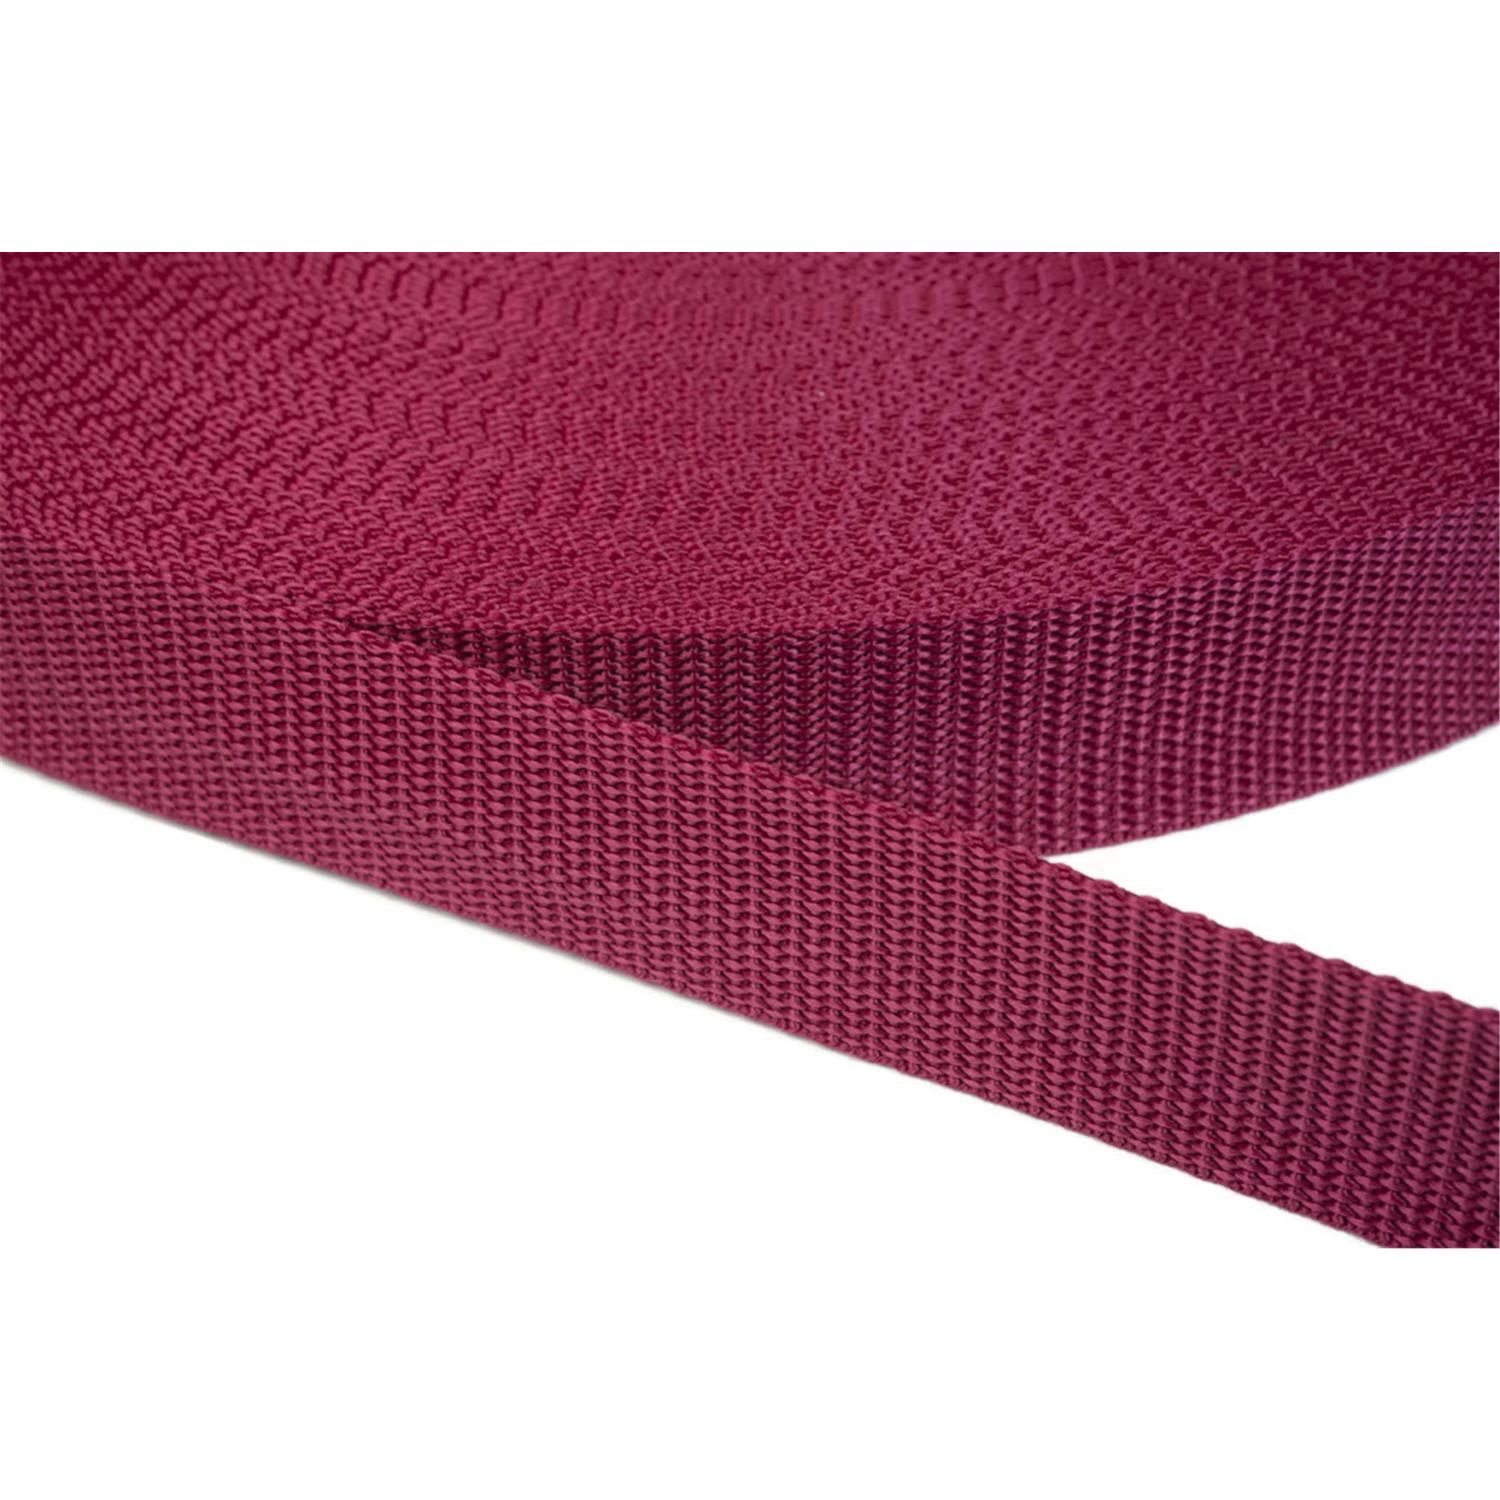 Gurtband 40mm breit aus Polypropylen in 41 Farben 21 - dunkelrot 50 Meter